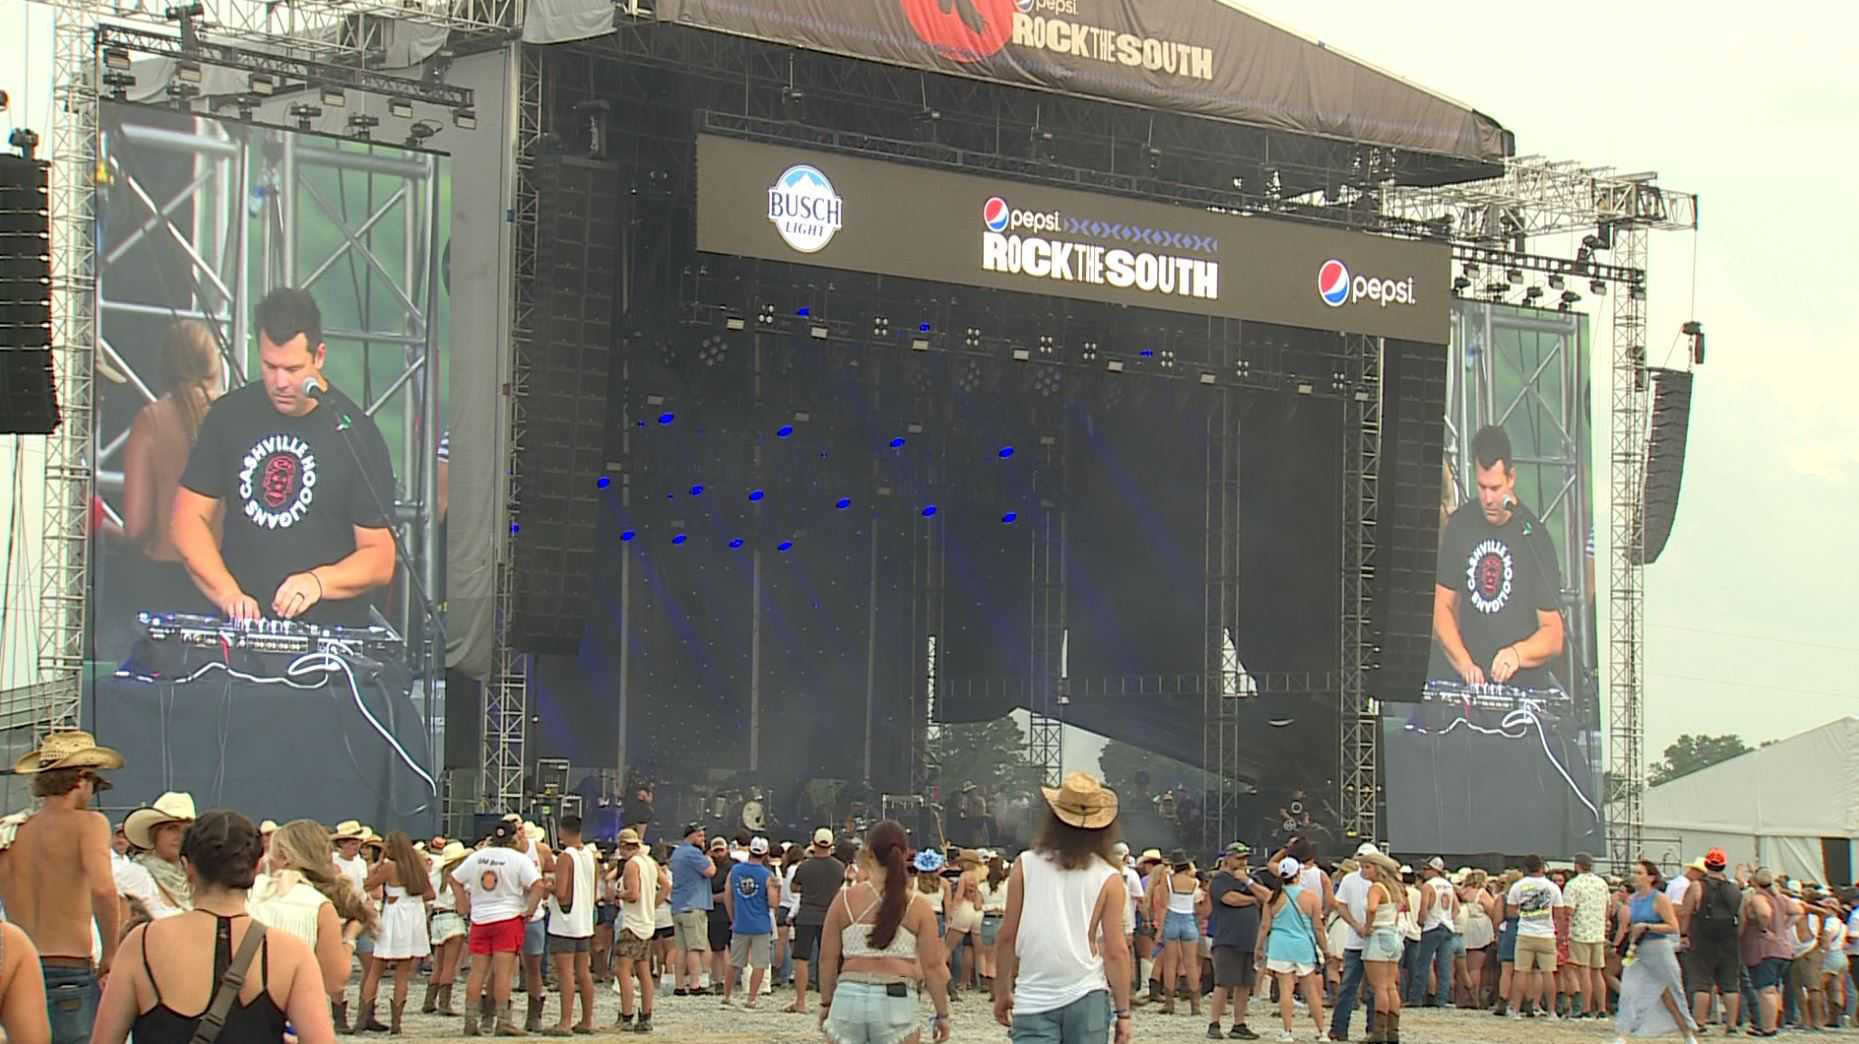 Police investigating brutal assault at Rock the South music festival